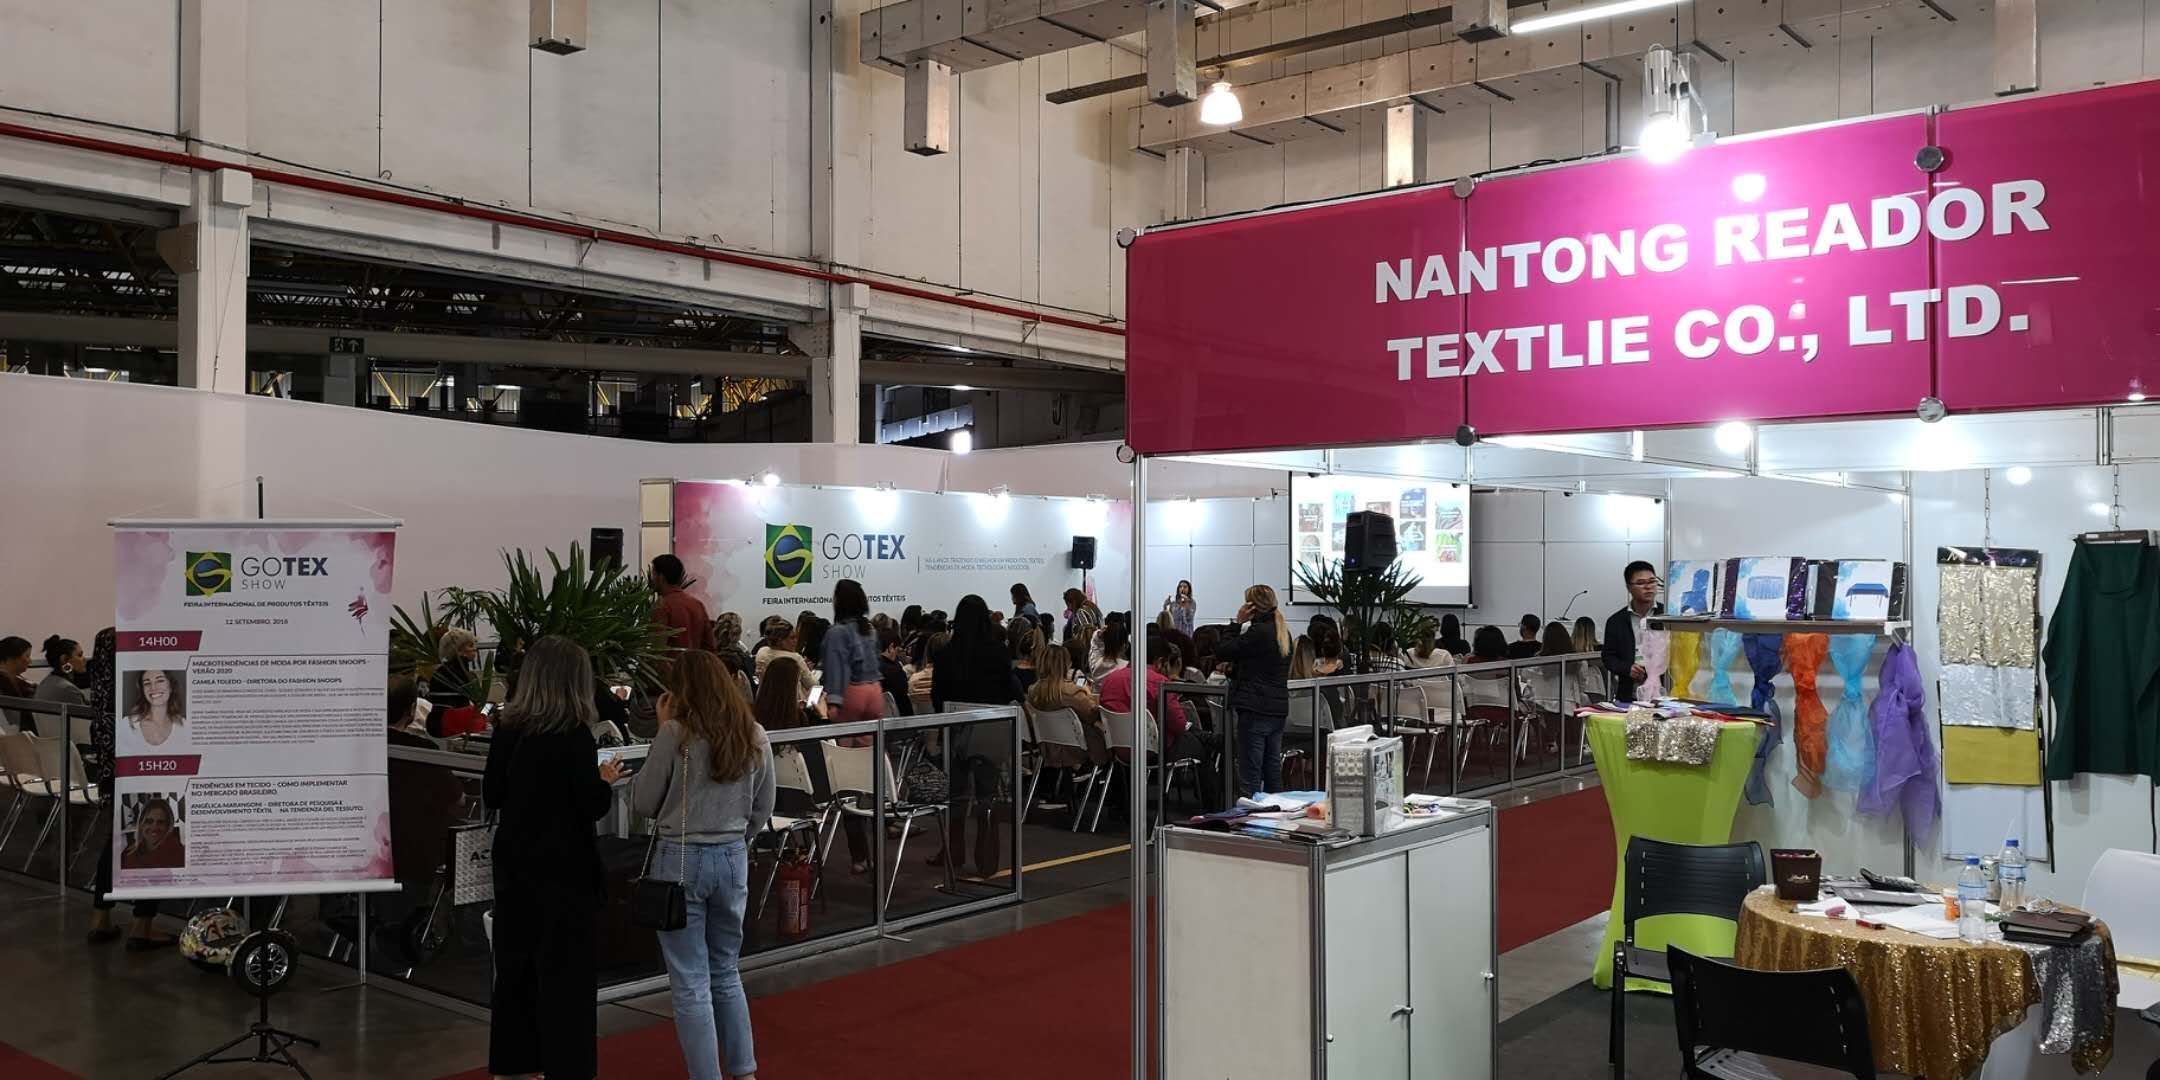 Nantong reador textile Co.,Ltd participates in the Brazil GOTEX Show